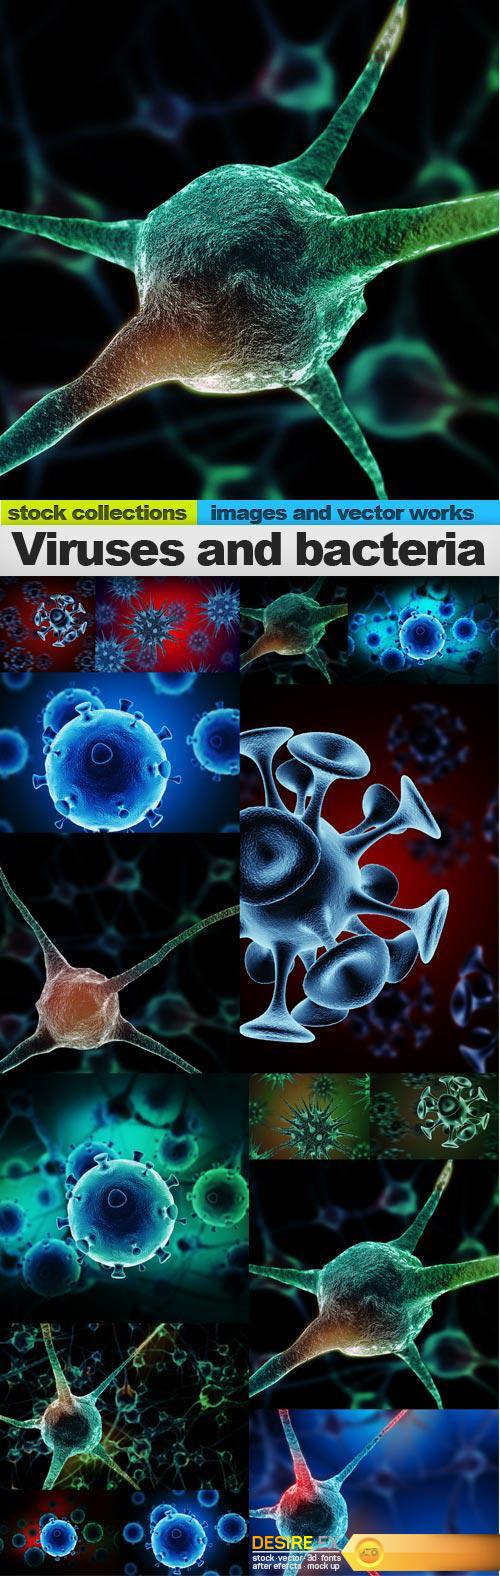 Viruses and bacteria, 15 x UHQ JPEG